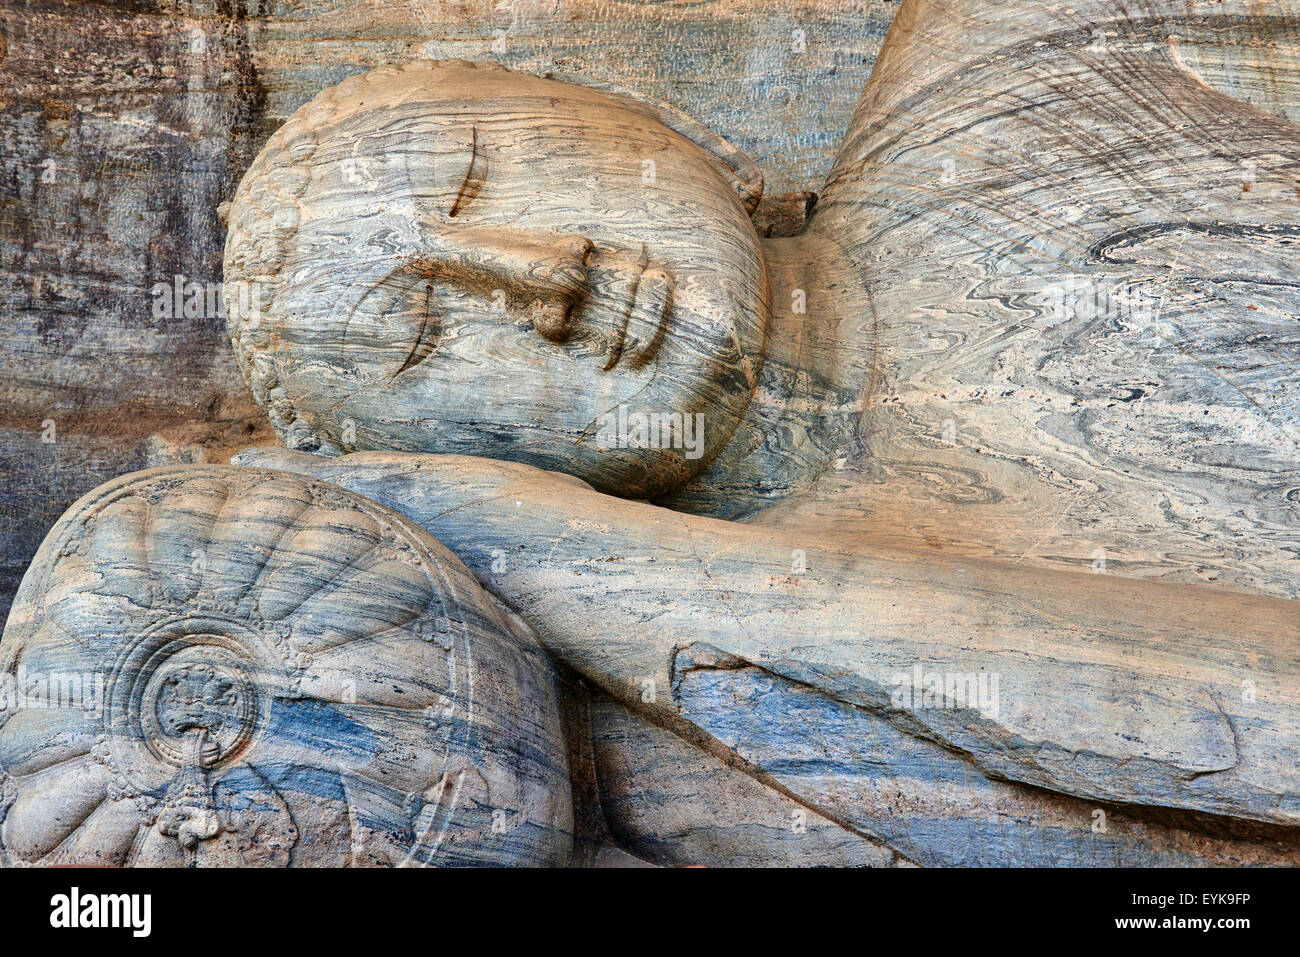 Sri Lanka, Ceylon, North Central Province, ancient city of Polonnaruwa, UNESCO World Heritage Site, Gal Vihara, reclining Buddha Stock Photo